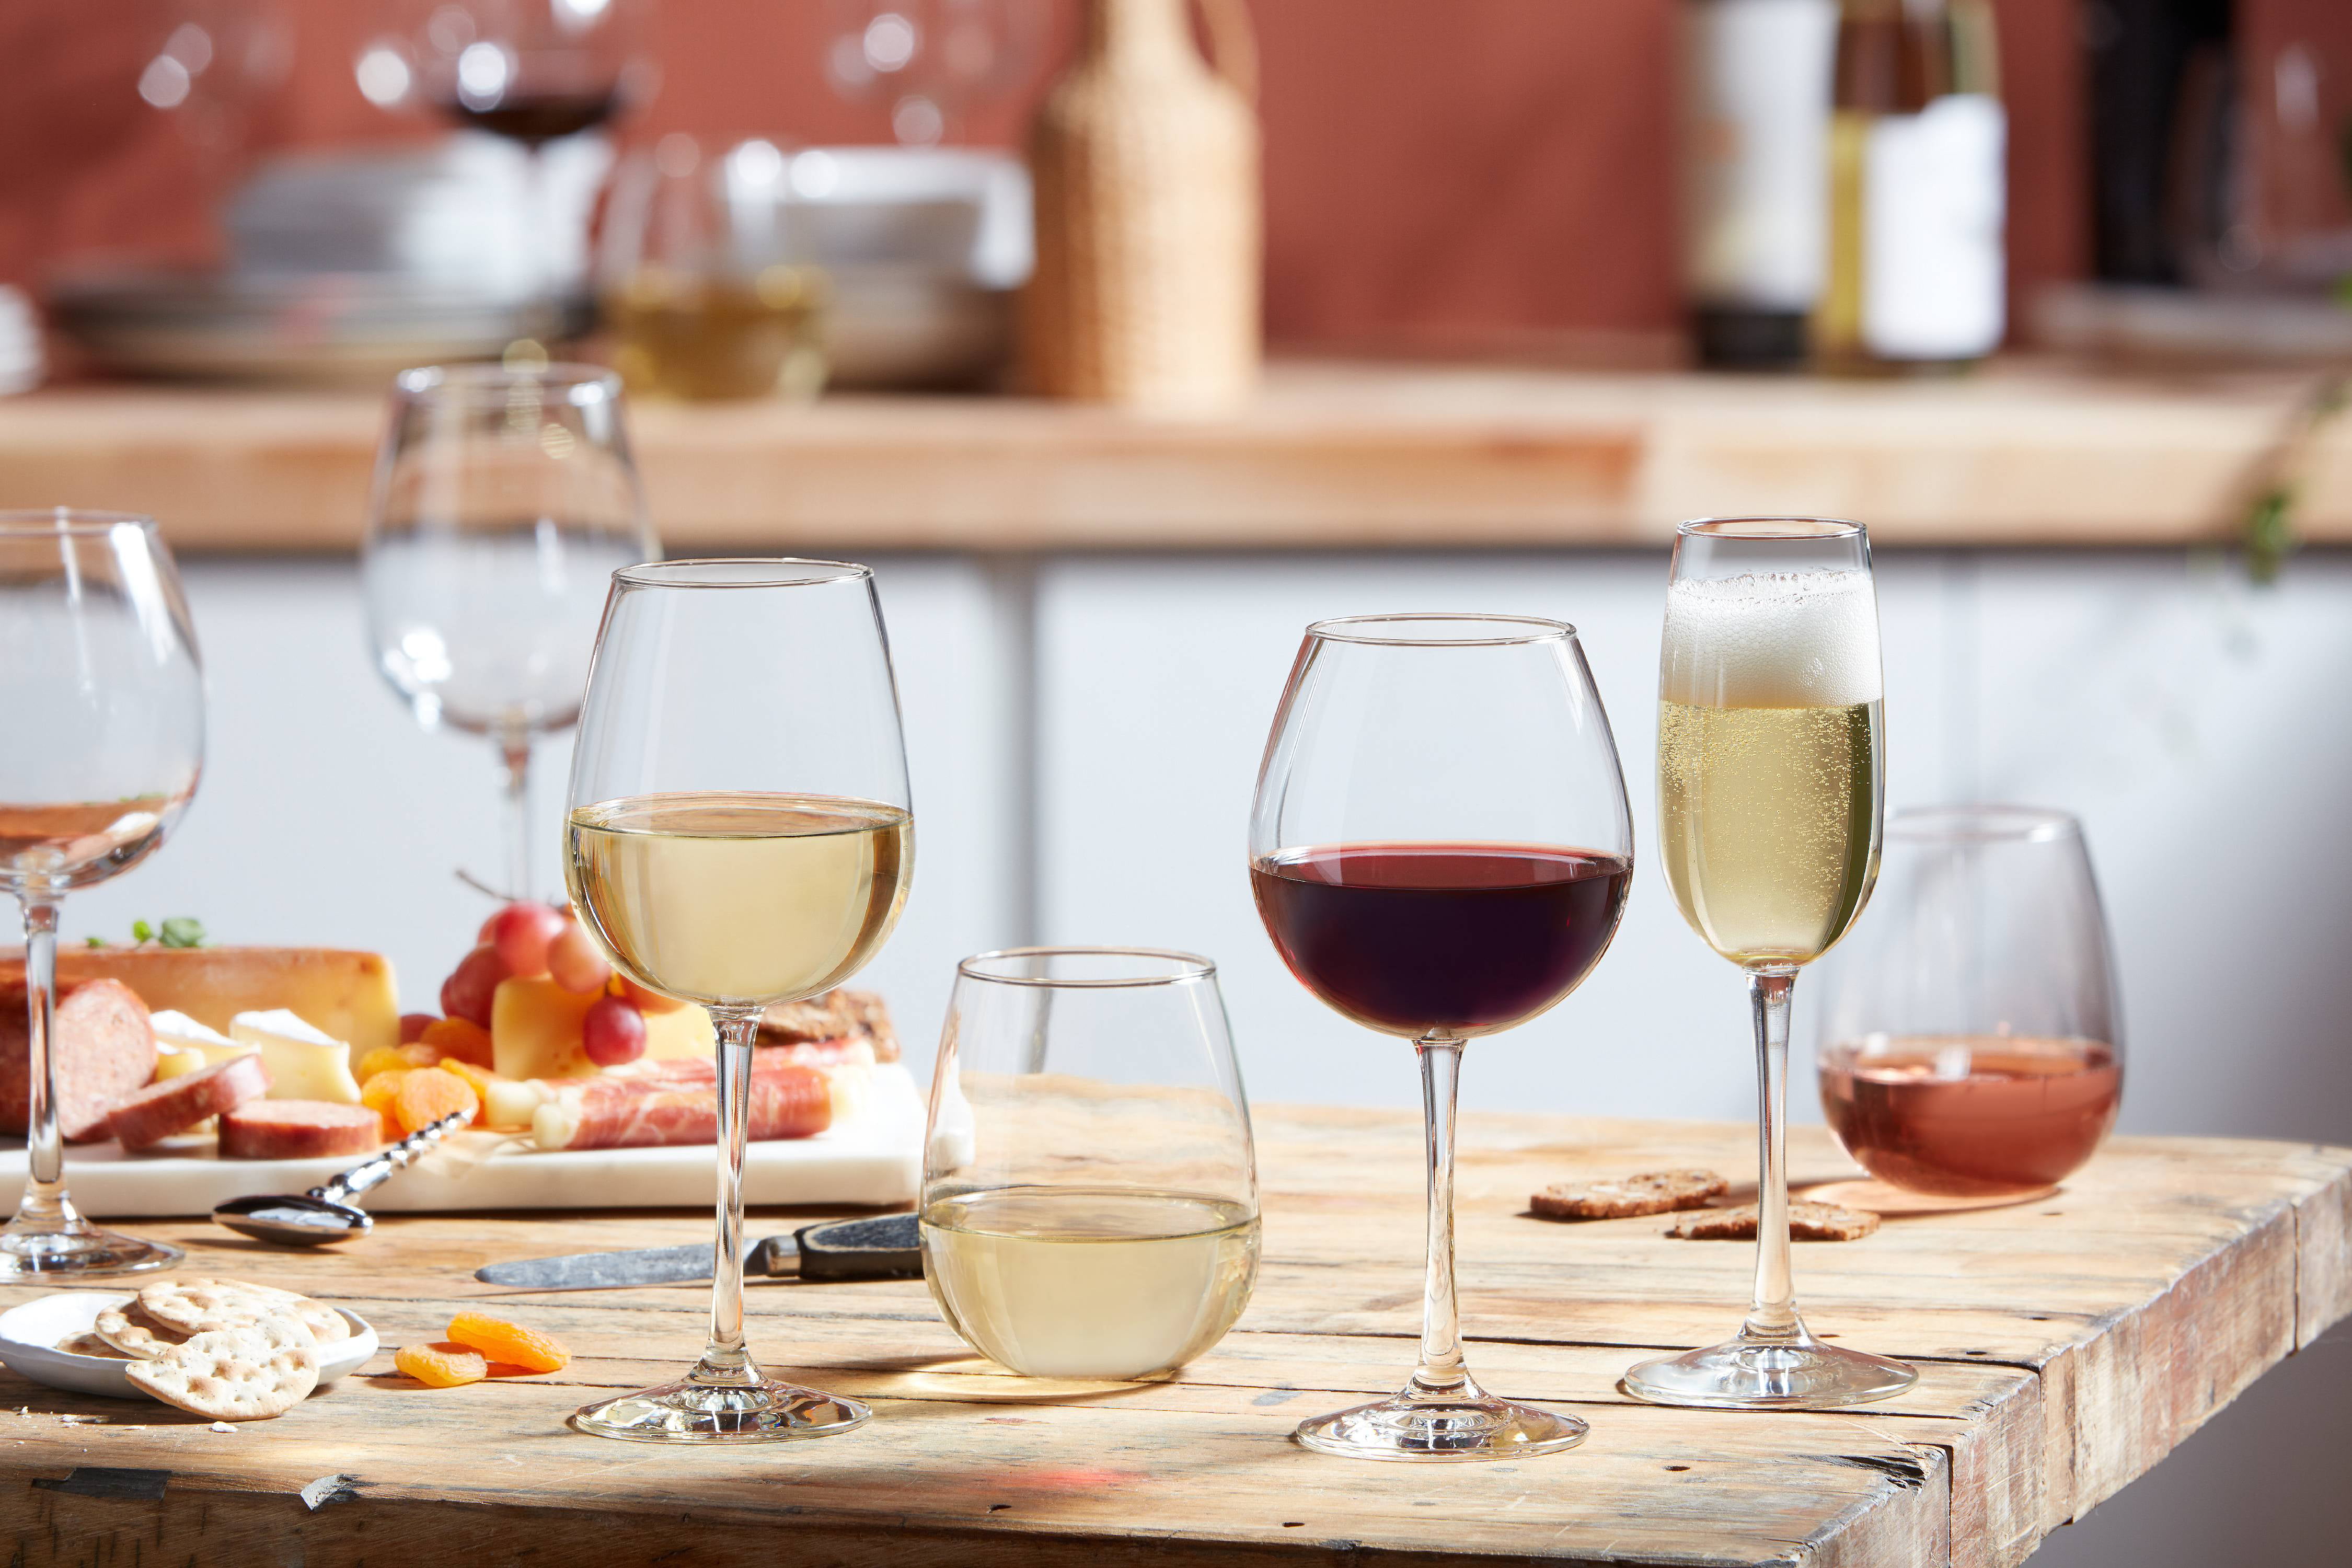 Neive Red & White 12 Piece Wine Glass Set